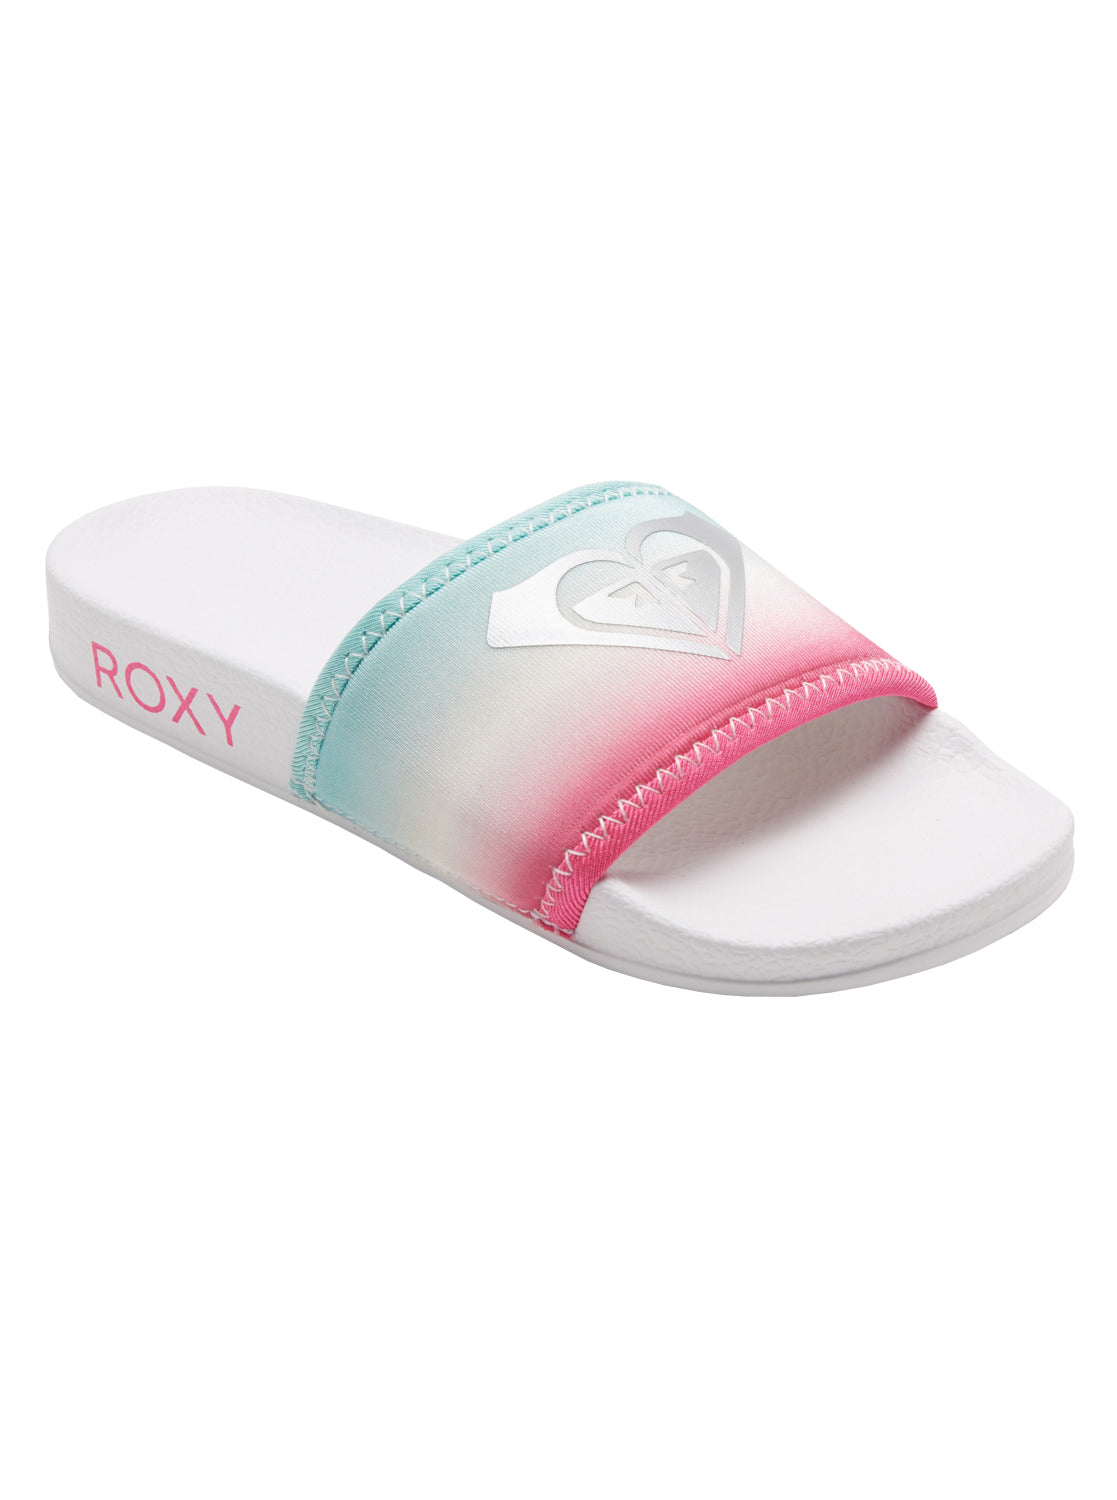 Roxy Slippy Neo Girls Sandal WCQ-White-Crazy Pink-Turquoise 5 Y